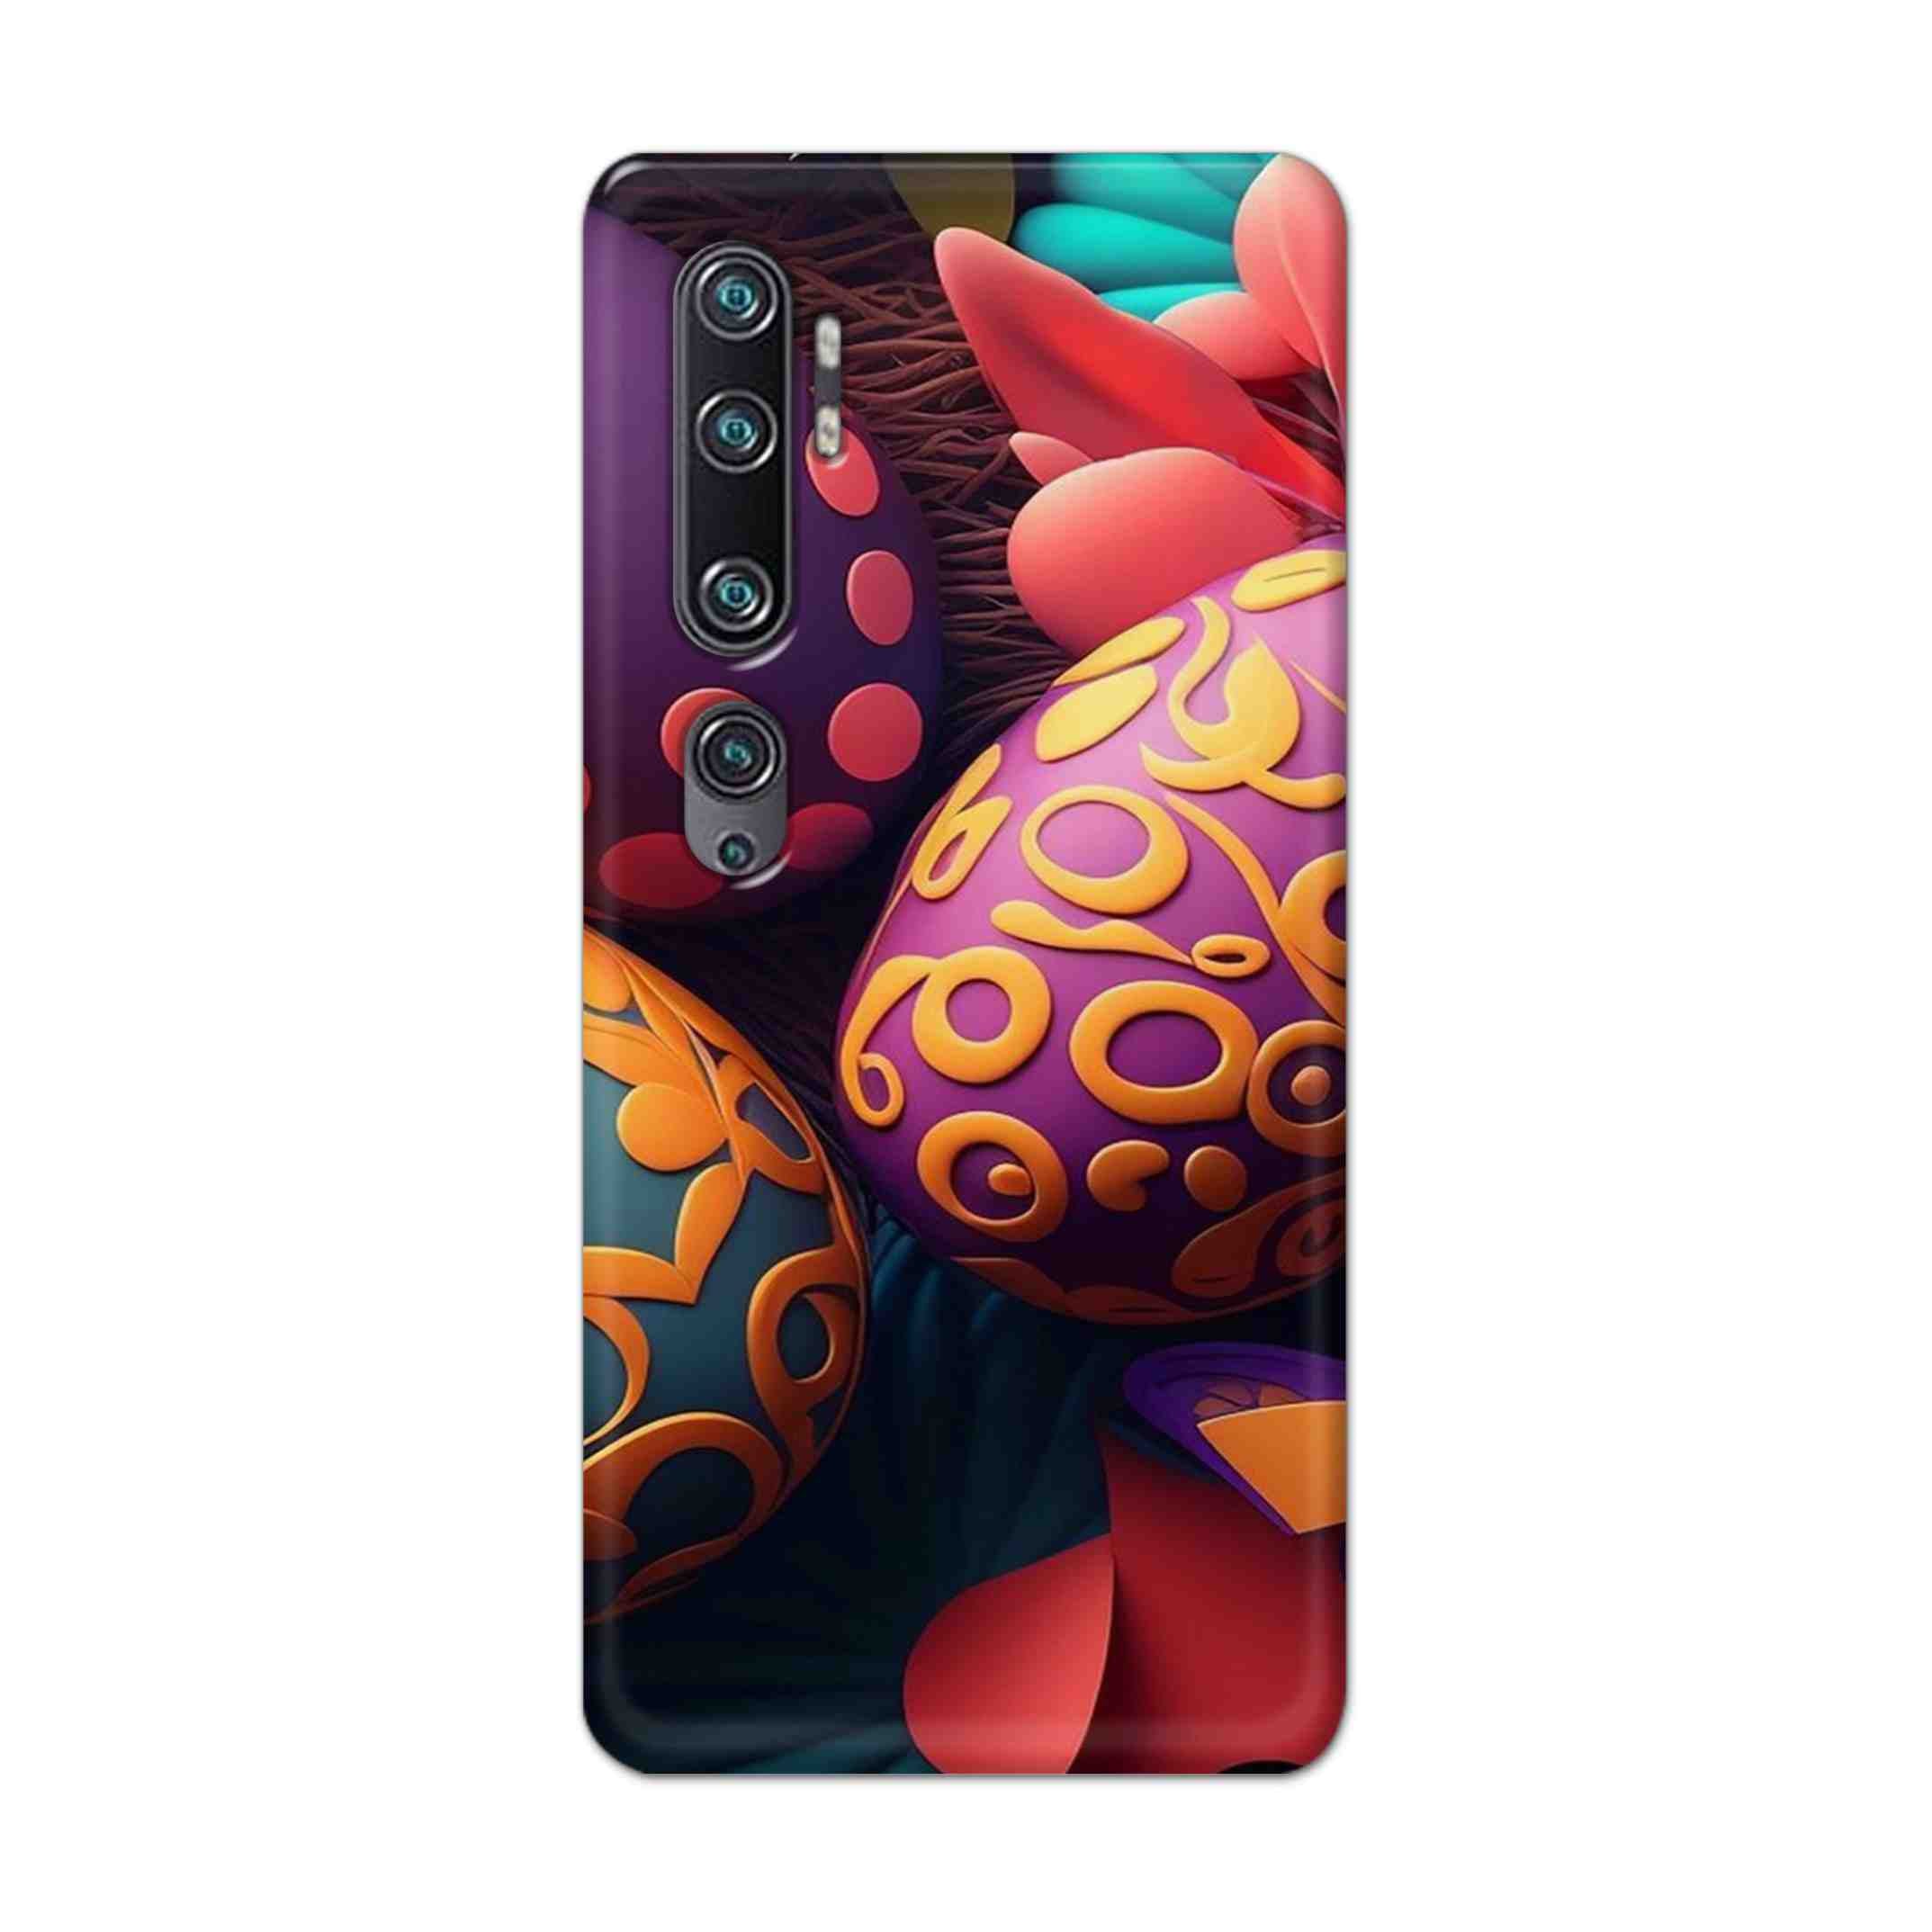 Buy Easter Egg Hard Back Mobile Phone Case Cover For Xiaomi Mi Note 10 Online